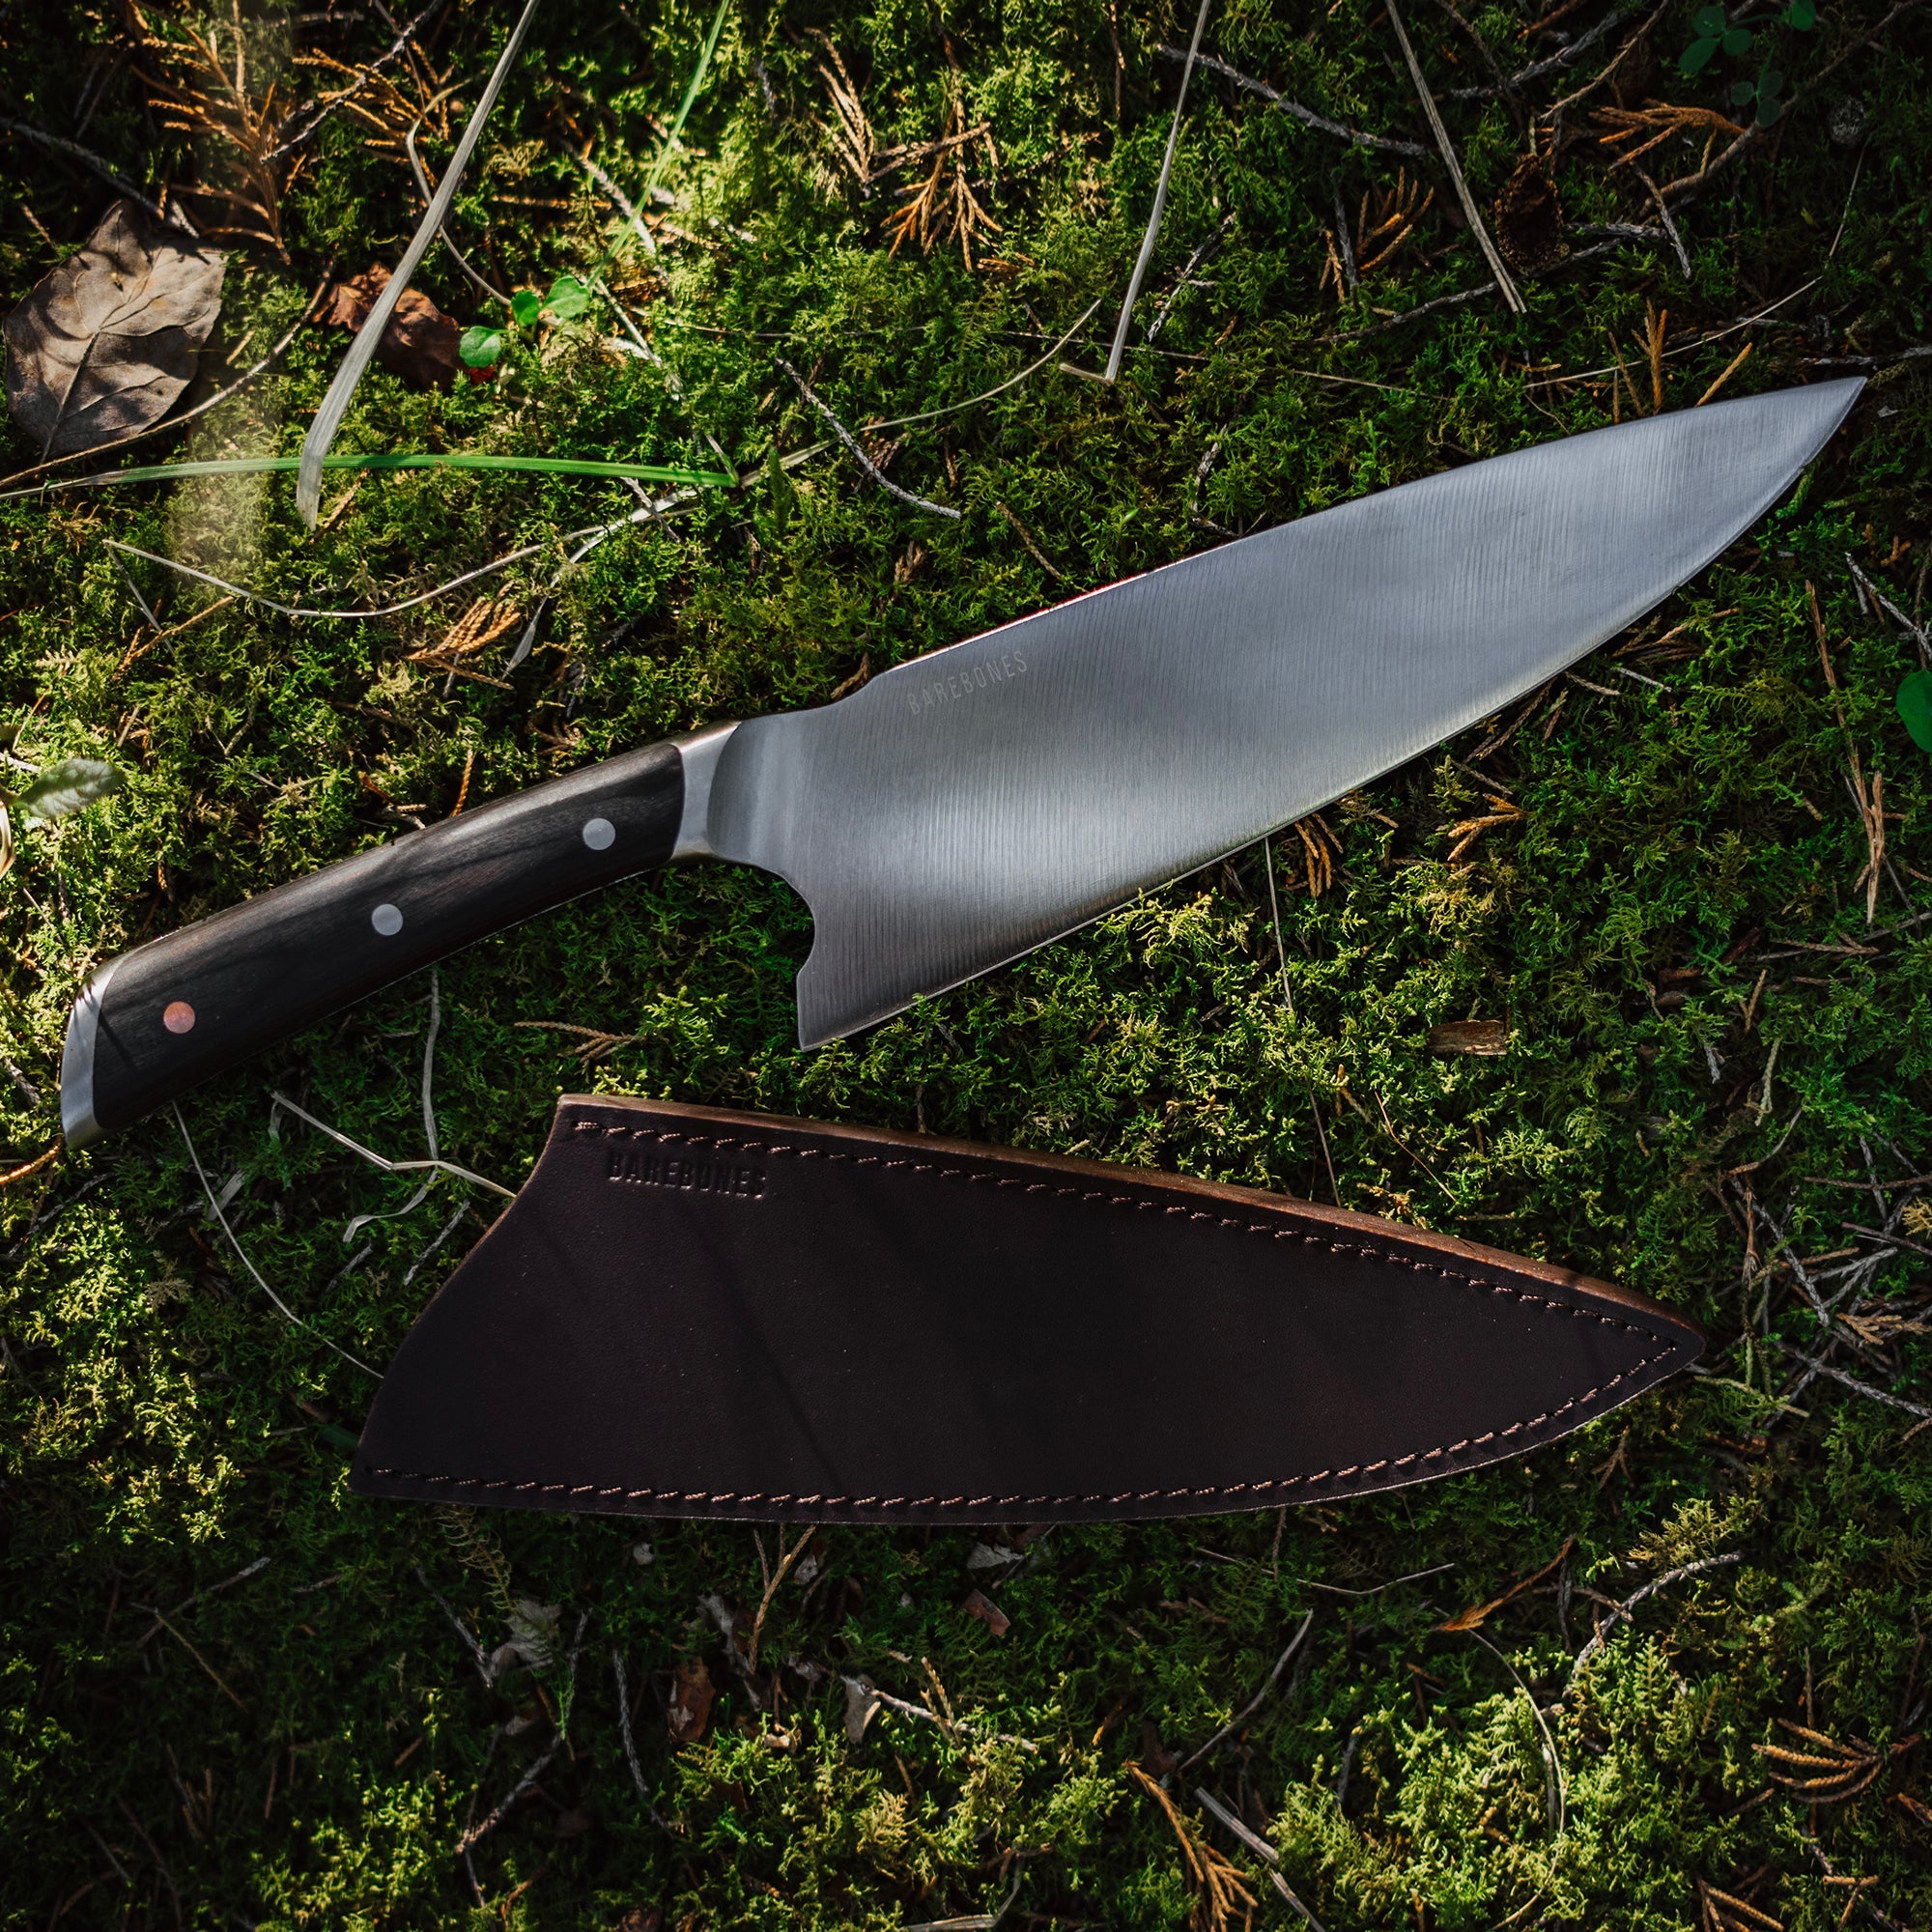 NATURAL OLIVE WOOD CUSTOM COMPOSITE KNIFE HANDLE MATERIAL BLANK